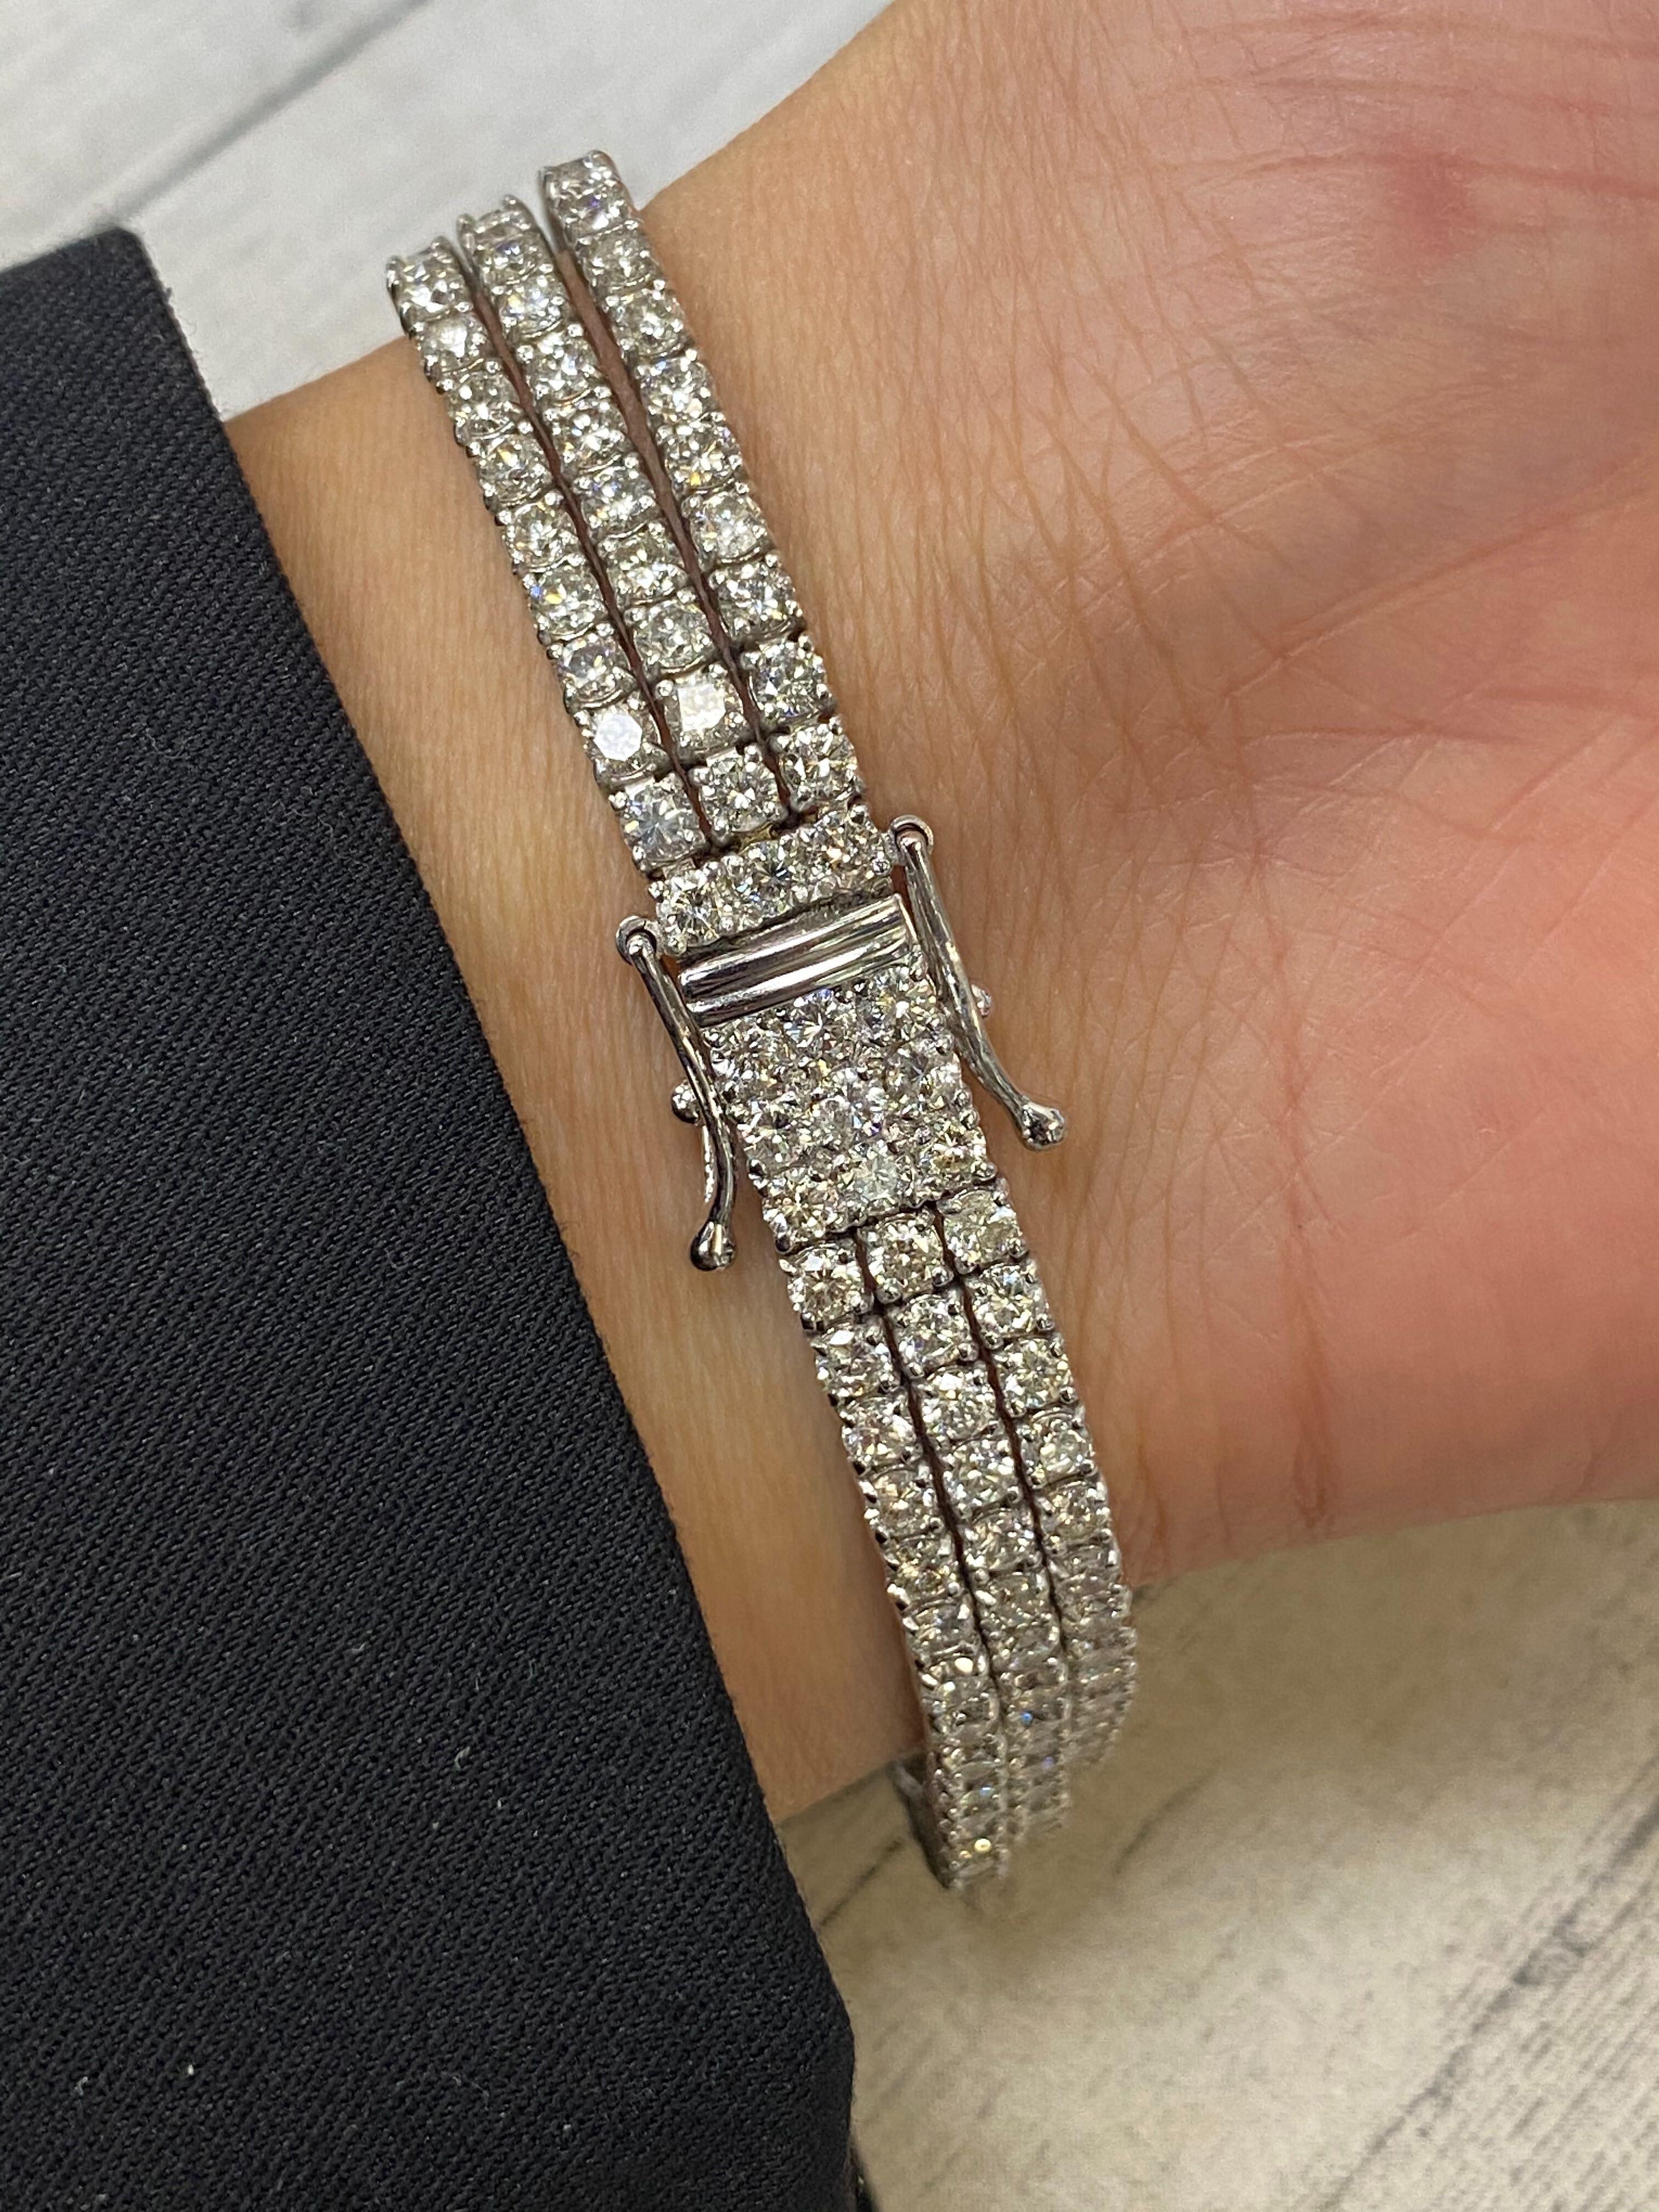 Rachel Koen 3 Row Prong Set Diamond Tennis Bracelet 14K White Gold 14.20Cttw In New Condition For Sale In New York, NY